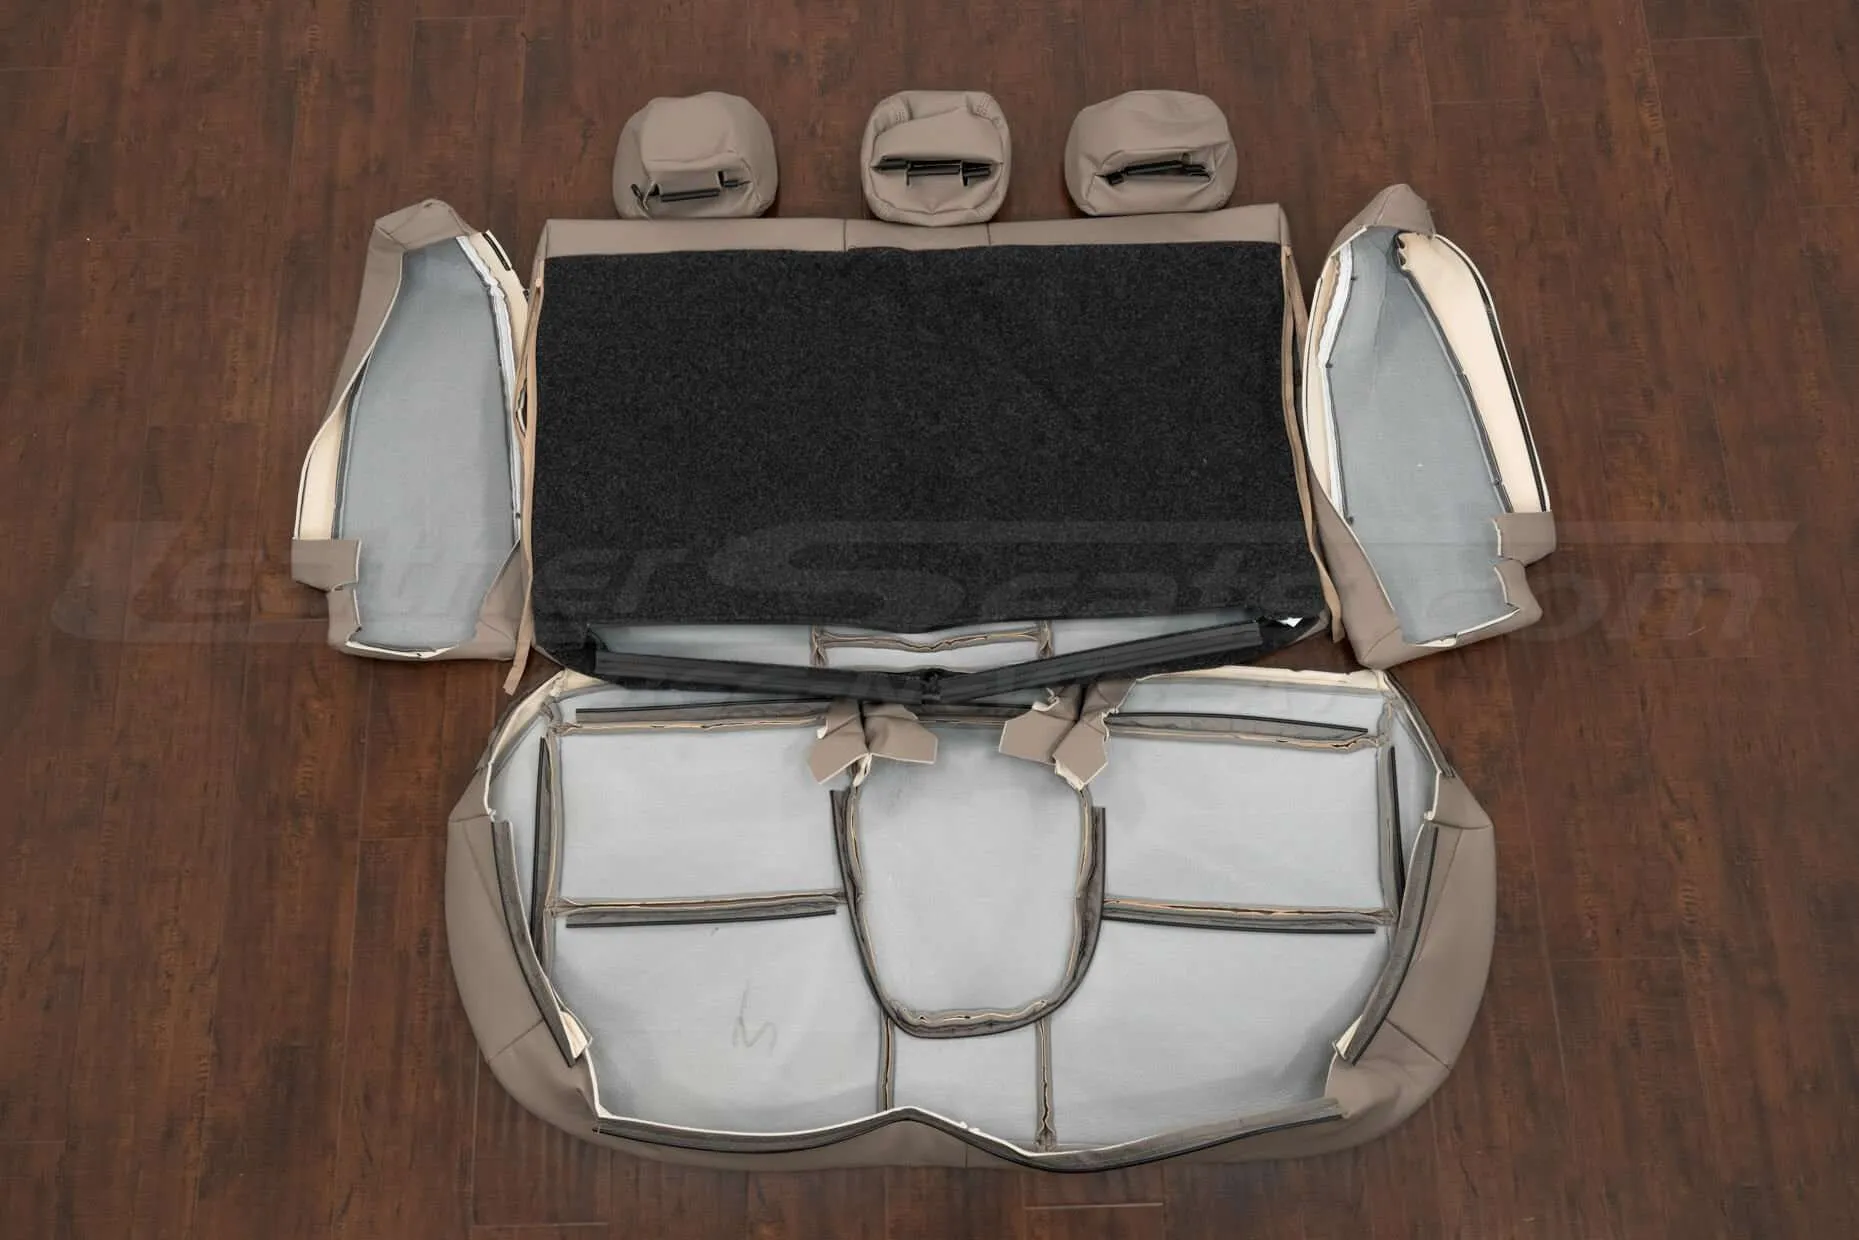 Back view of rear seats andbolsters